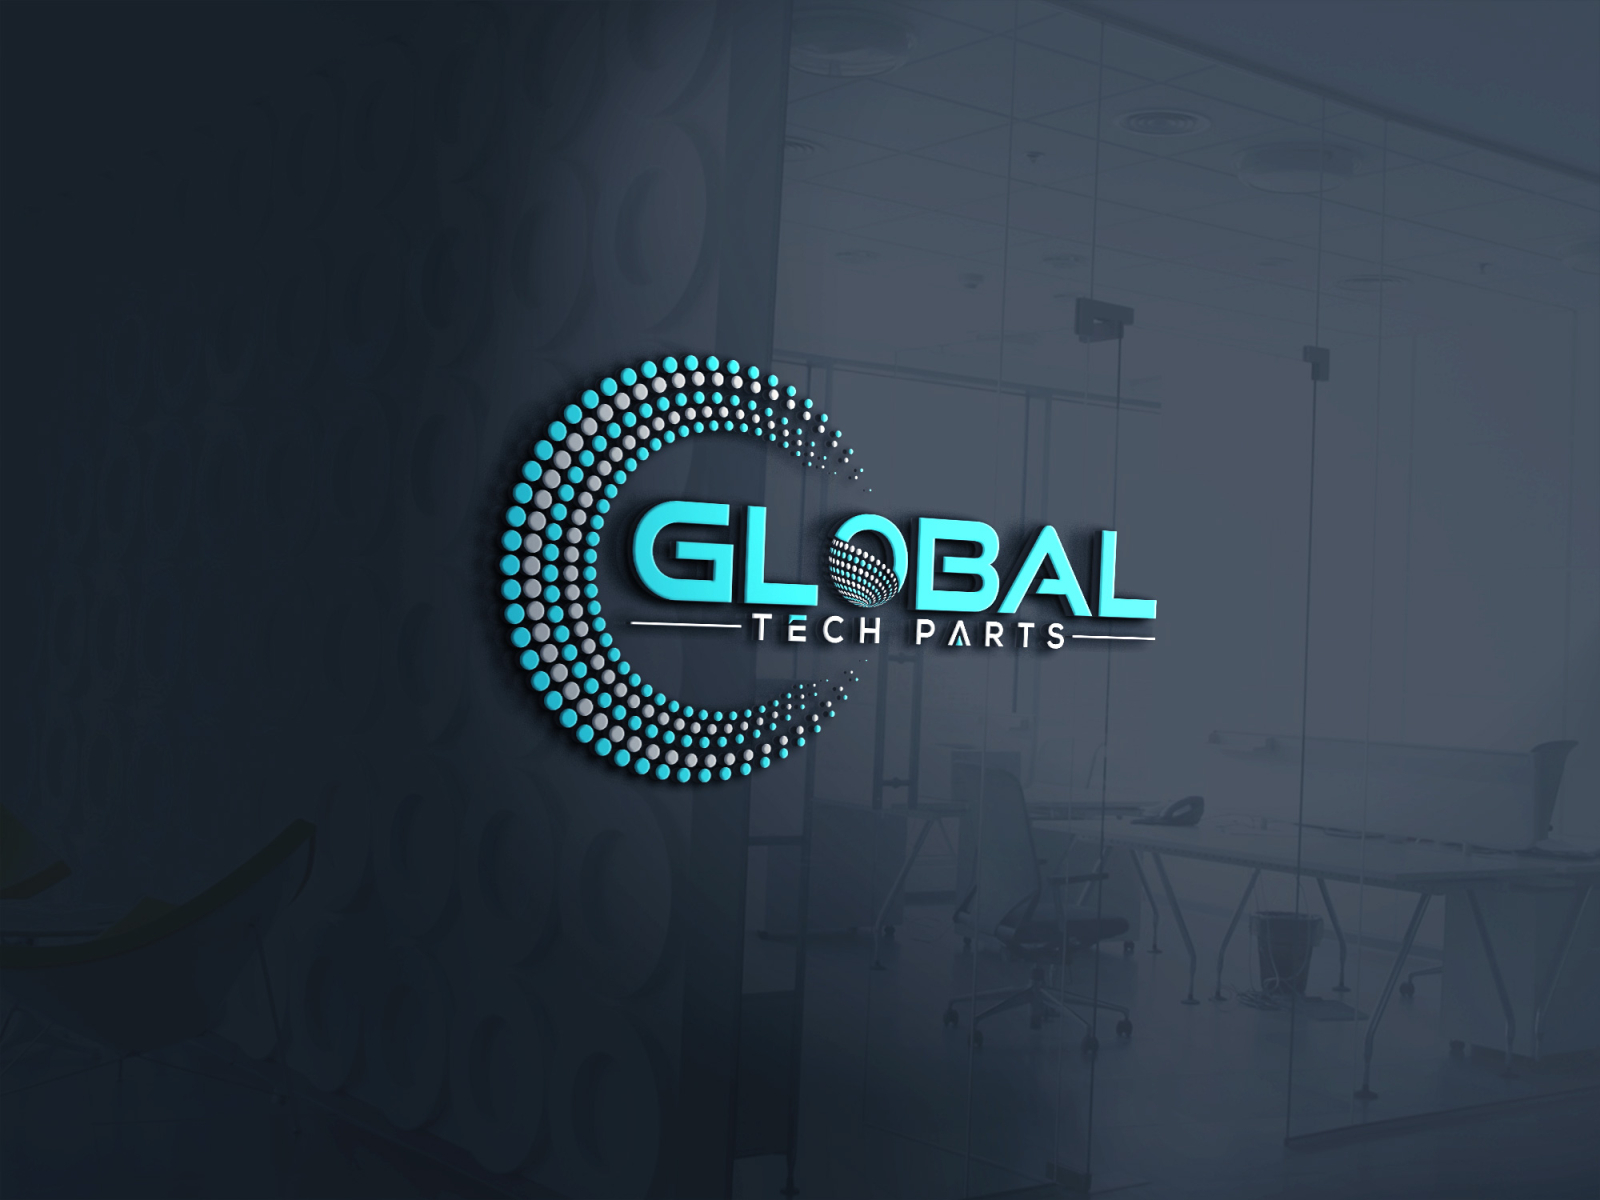 Global Tech Parts Logo Design Concept by Md. Mohaymenul Khandaker on ...